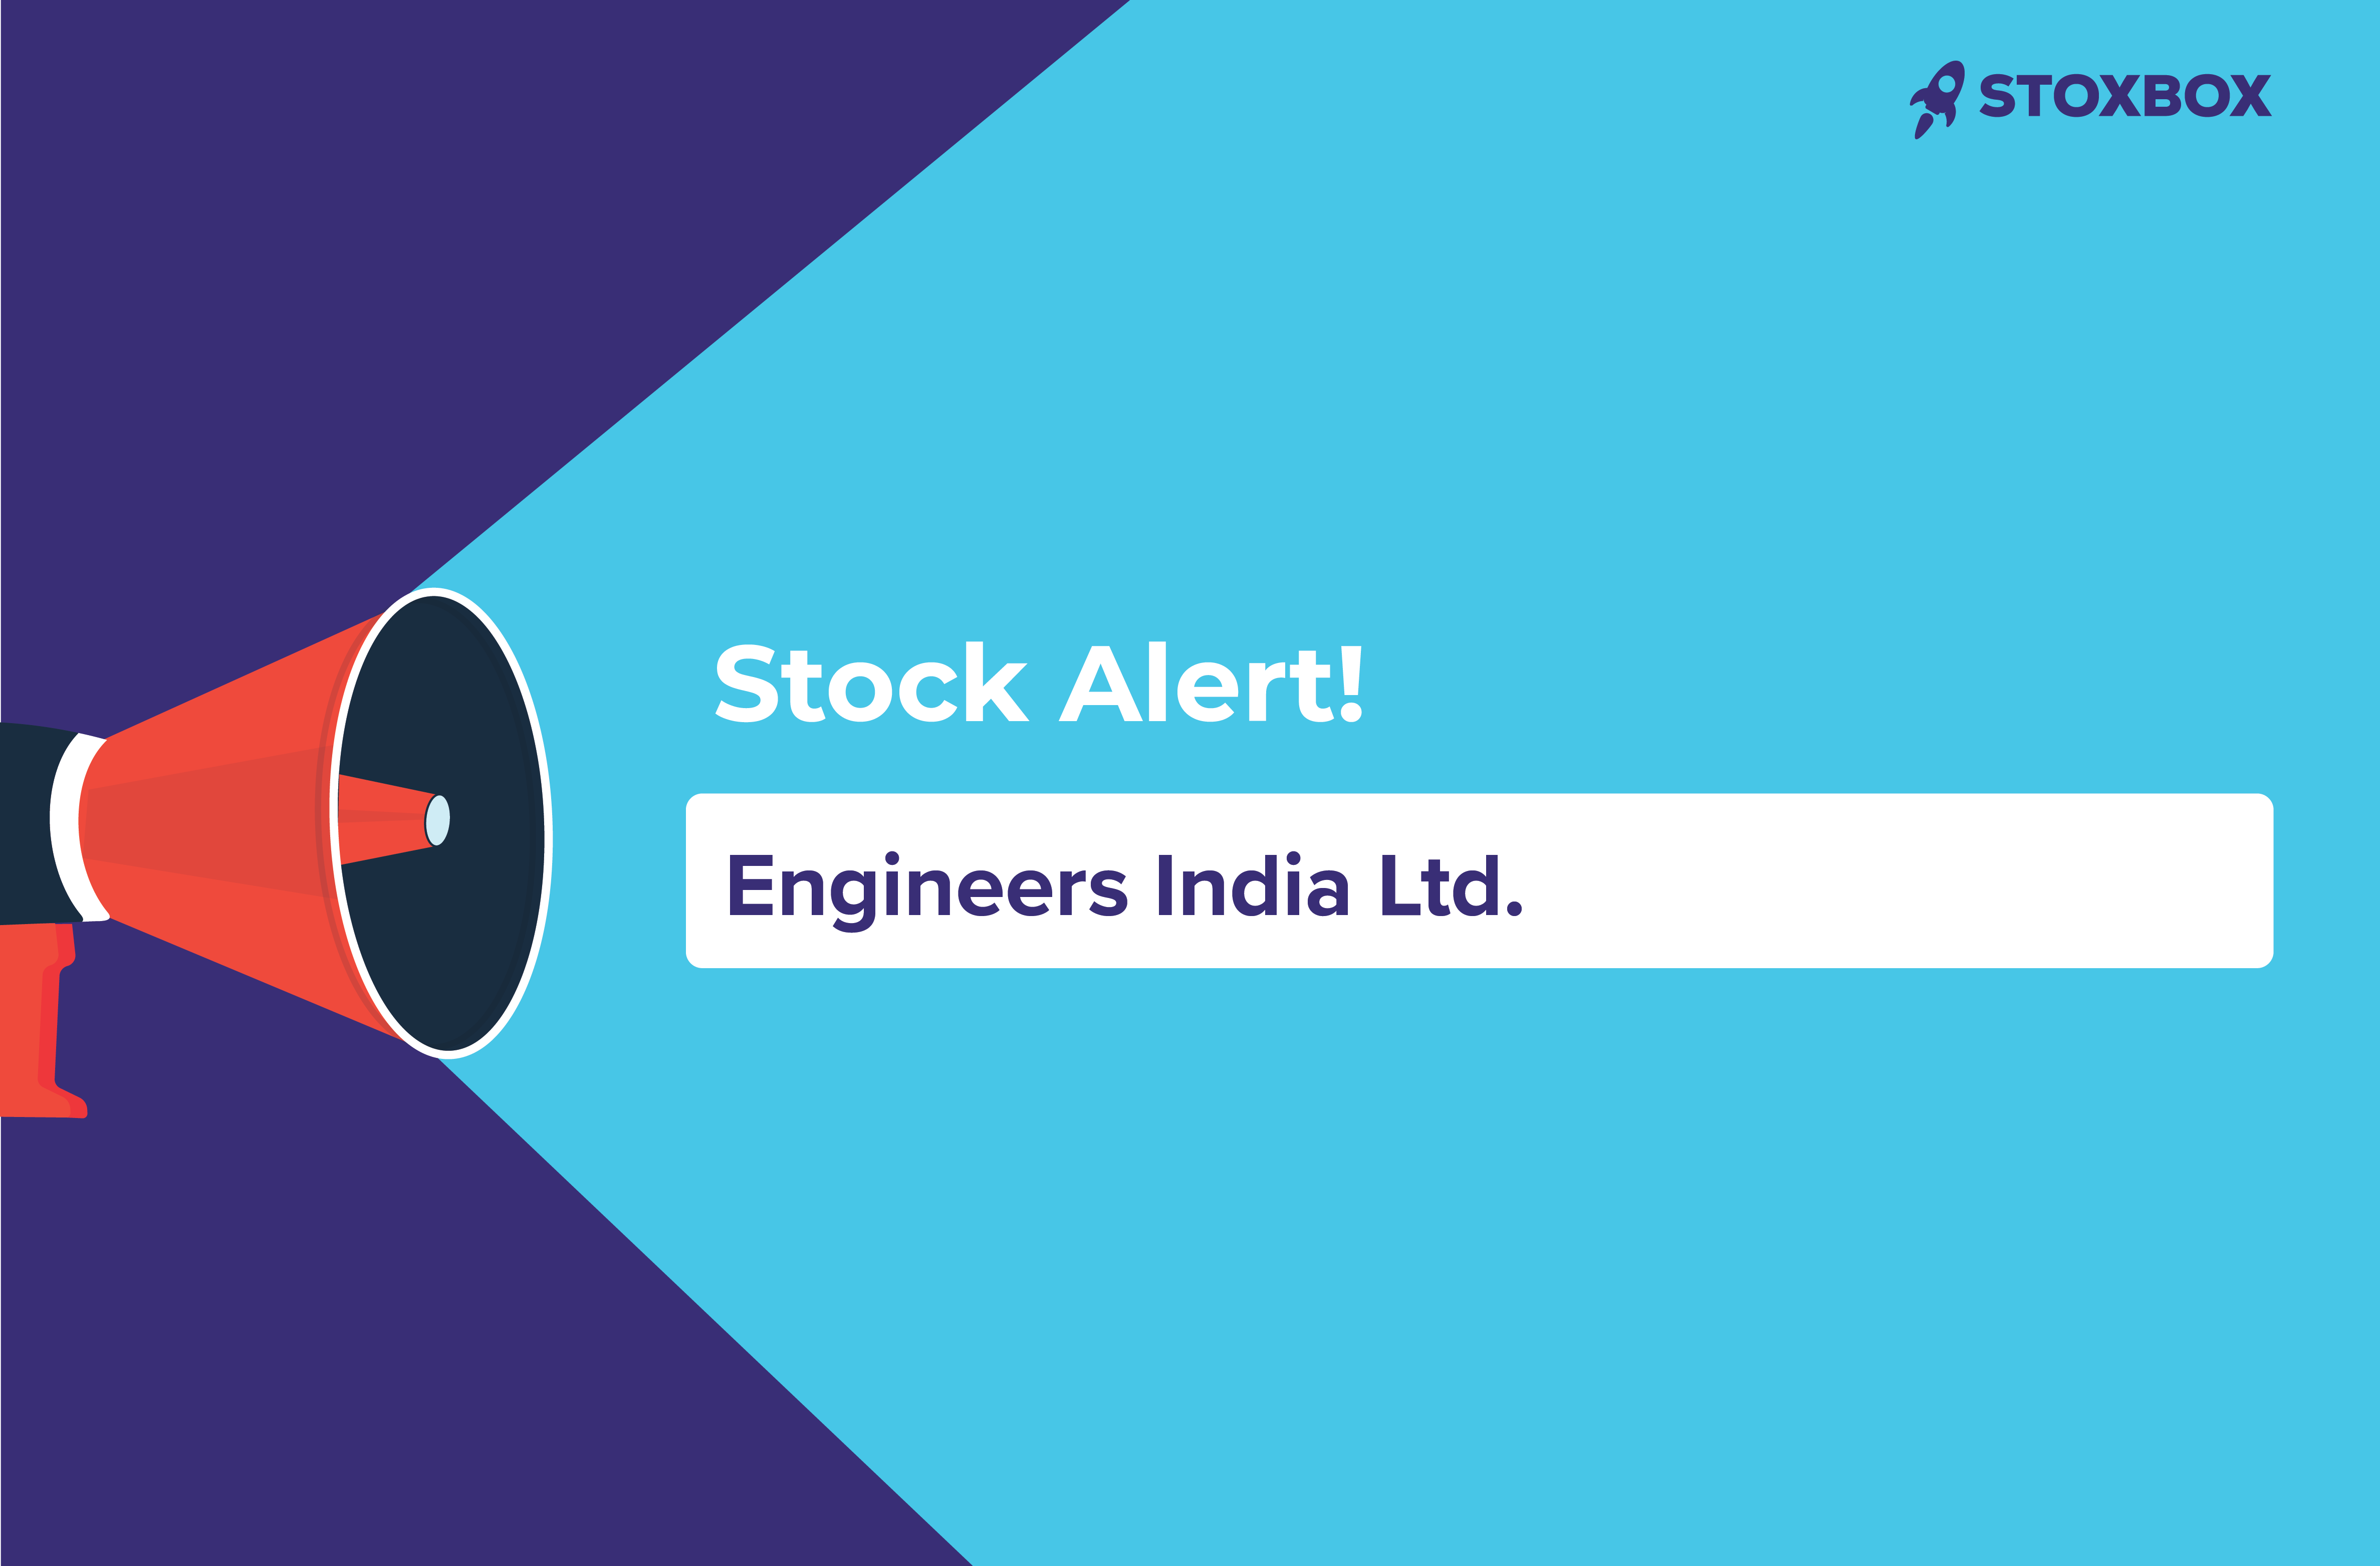 stoxbox stock alert: engineers india ltd - Buy